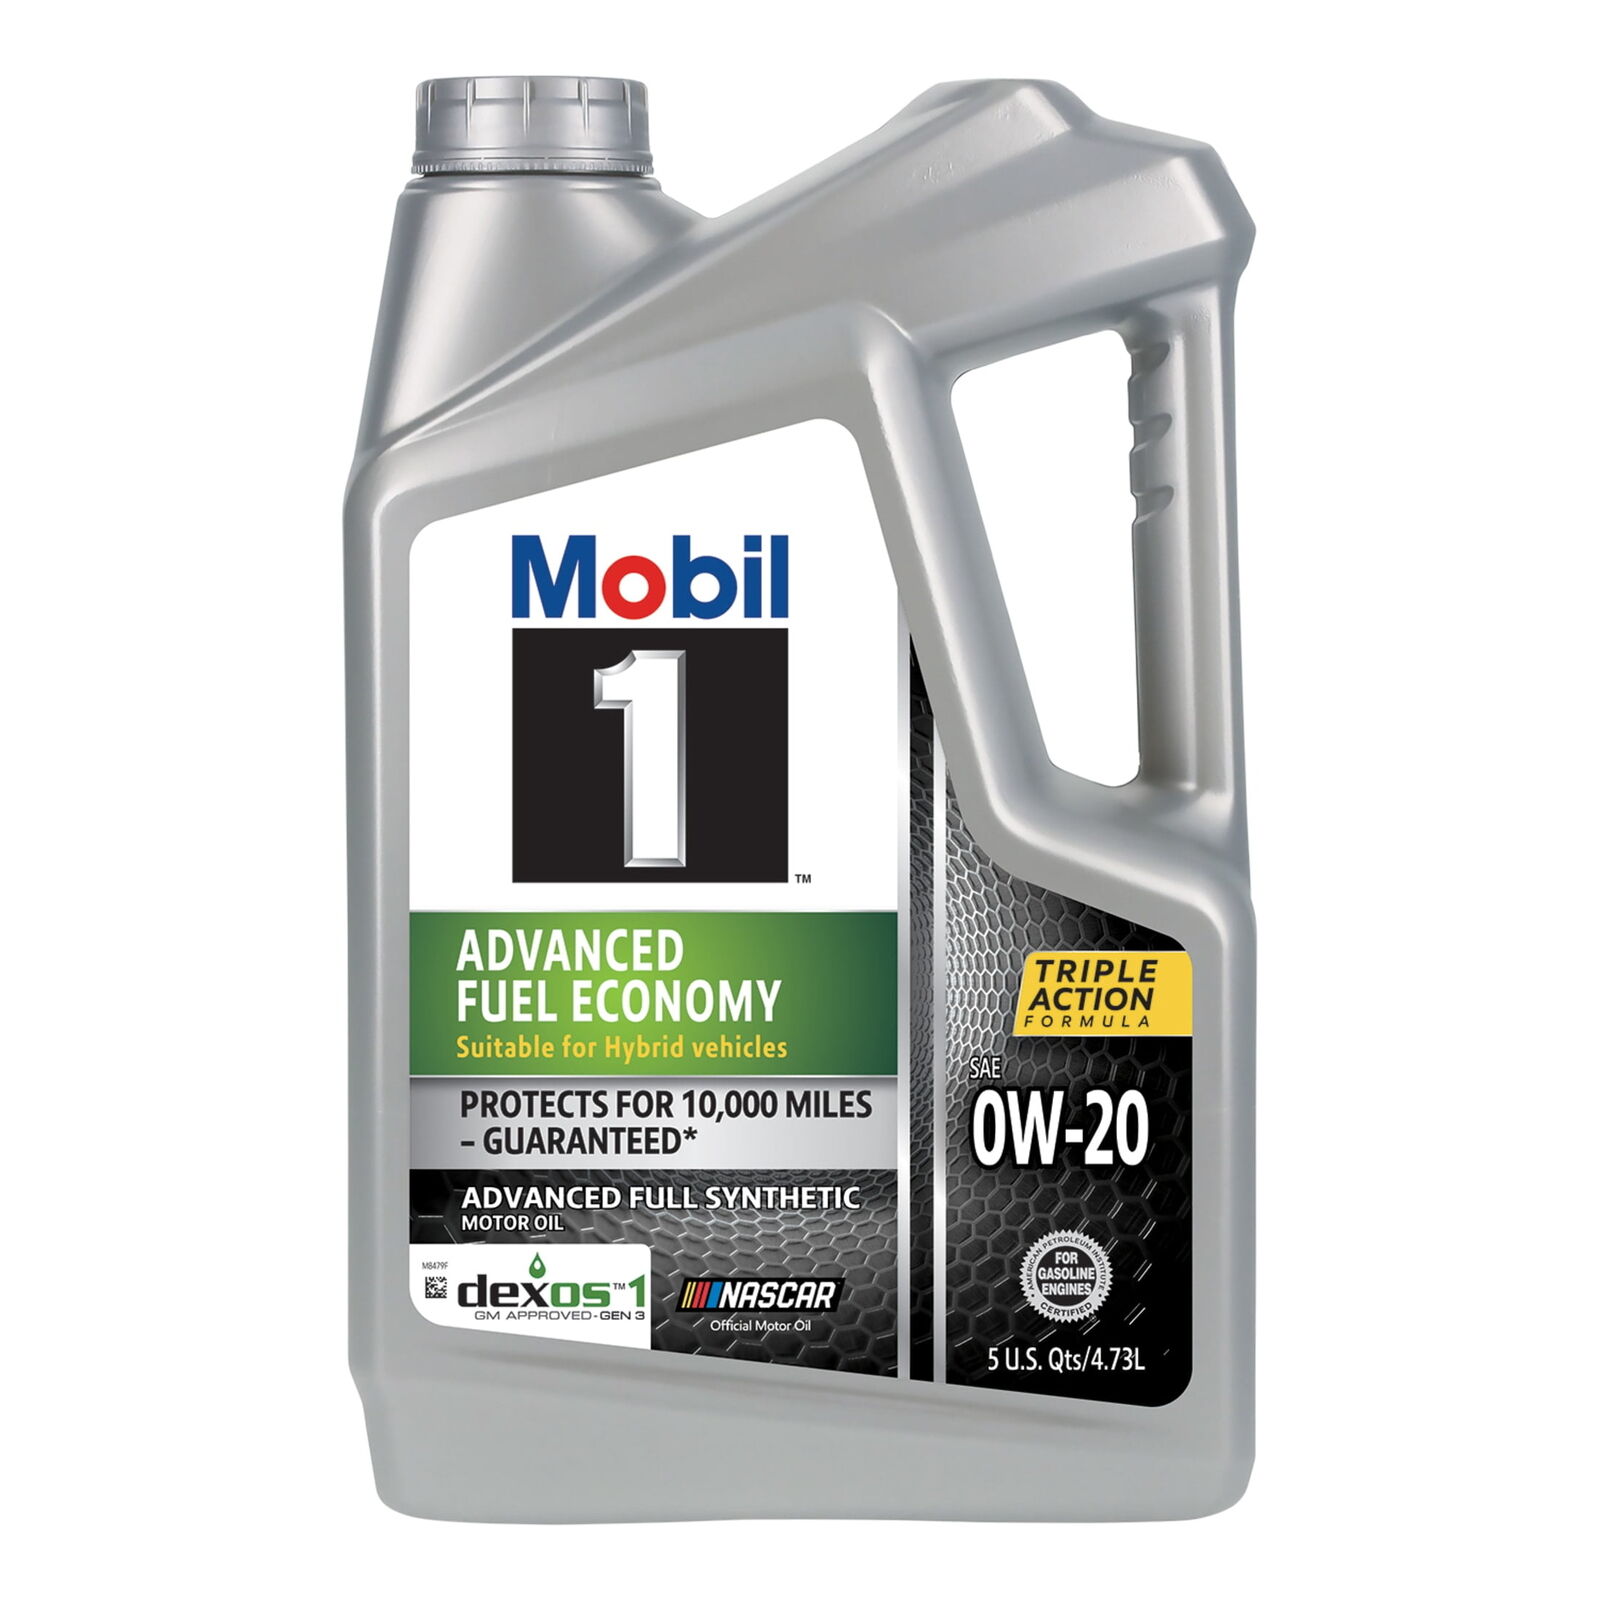 Mobil 1 Advanced Fuel Economy Full Synthetic Motor Oil 0W-20, 5 Quart US